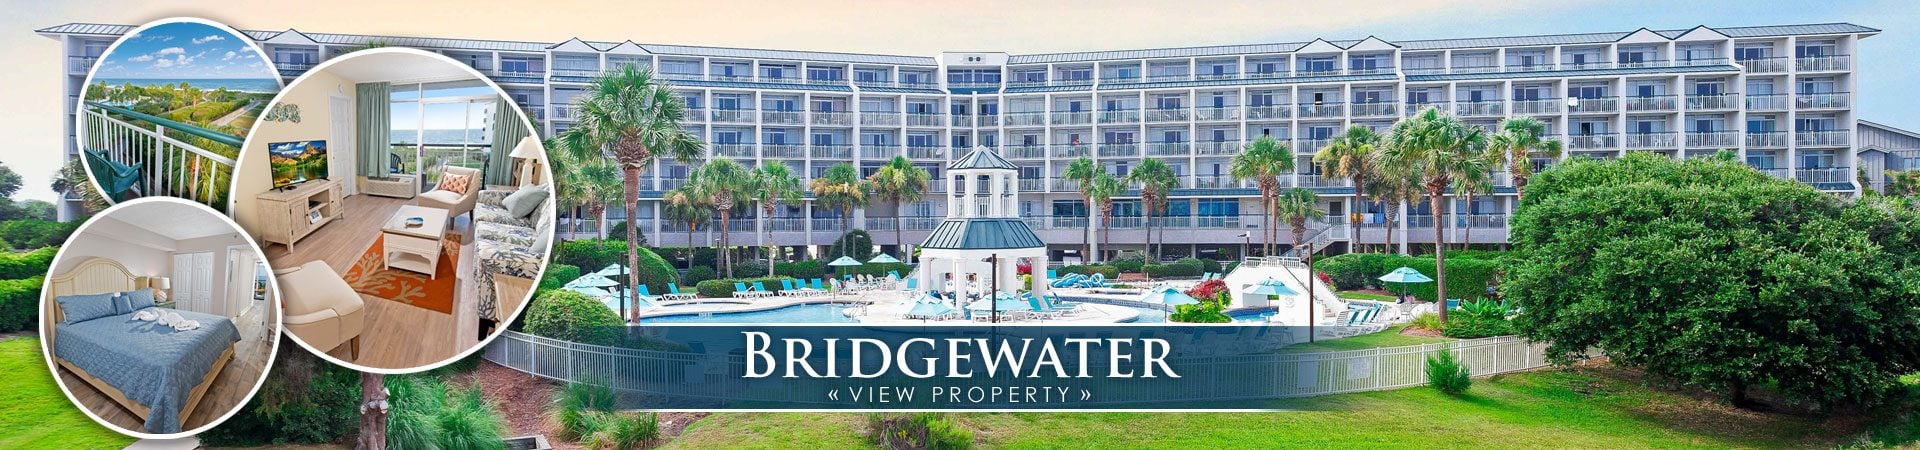 Bridgewater View Property 1920x450 1 3 